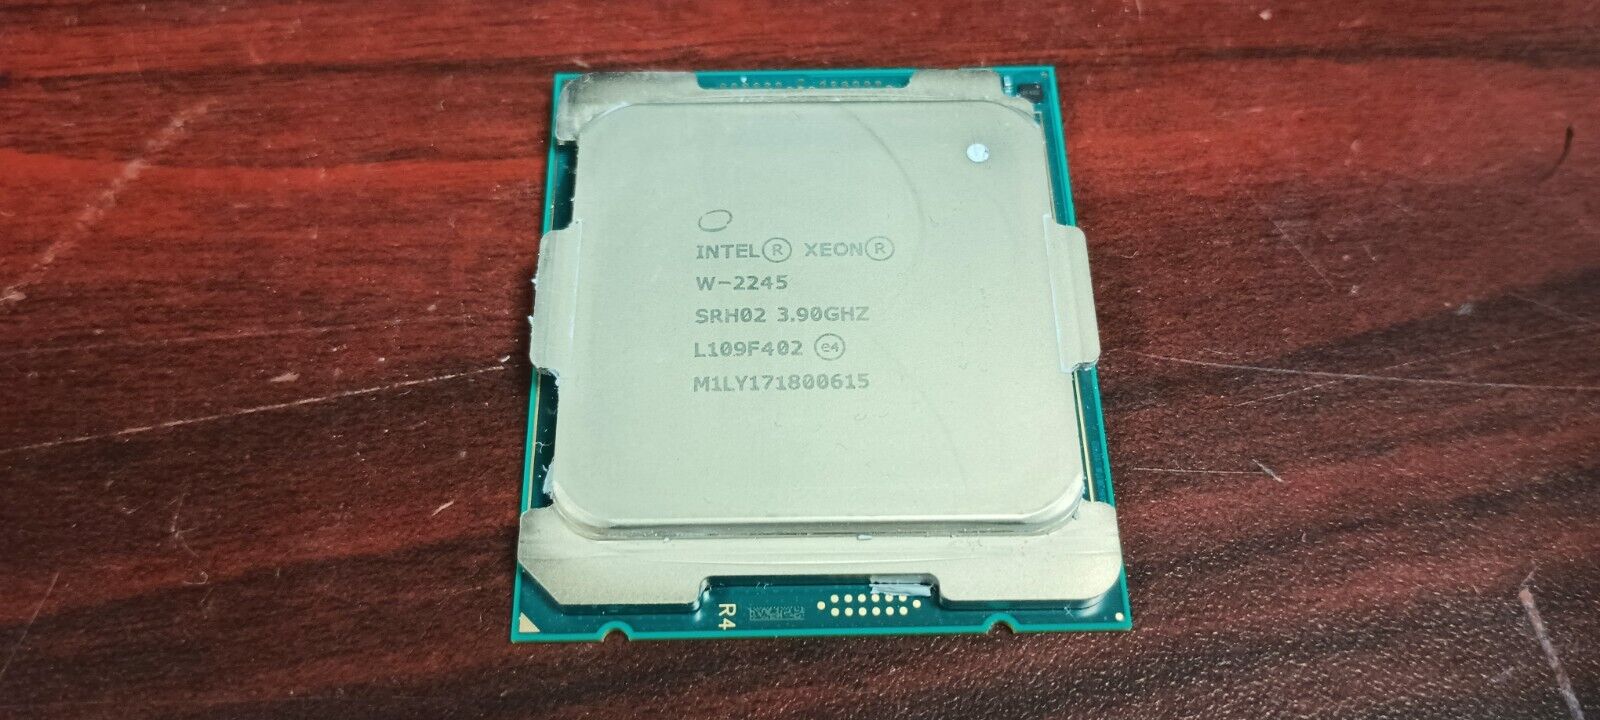 Intel Xeon W-2245 CPU Processor 3.9GHz 8-Cores LGA 2066 (SRH02) #95